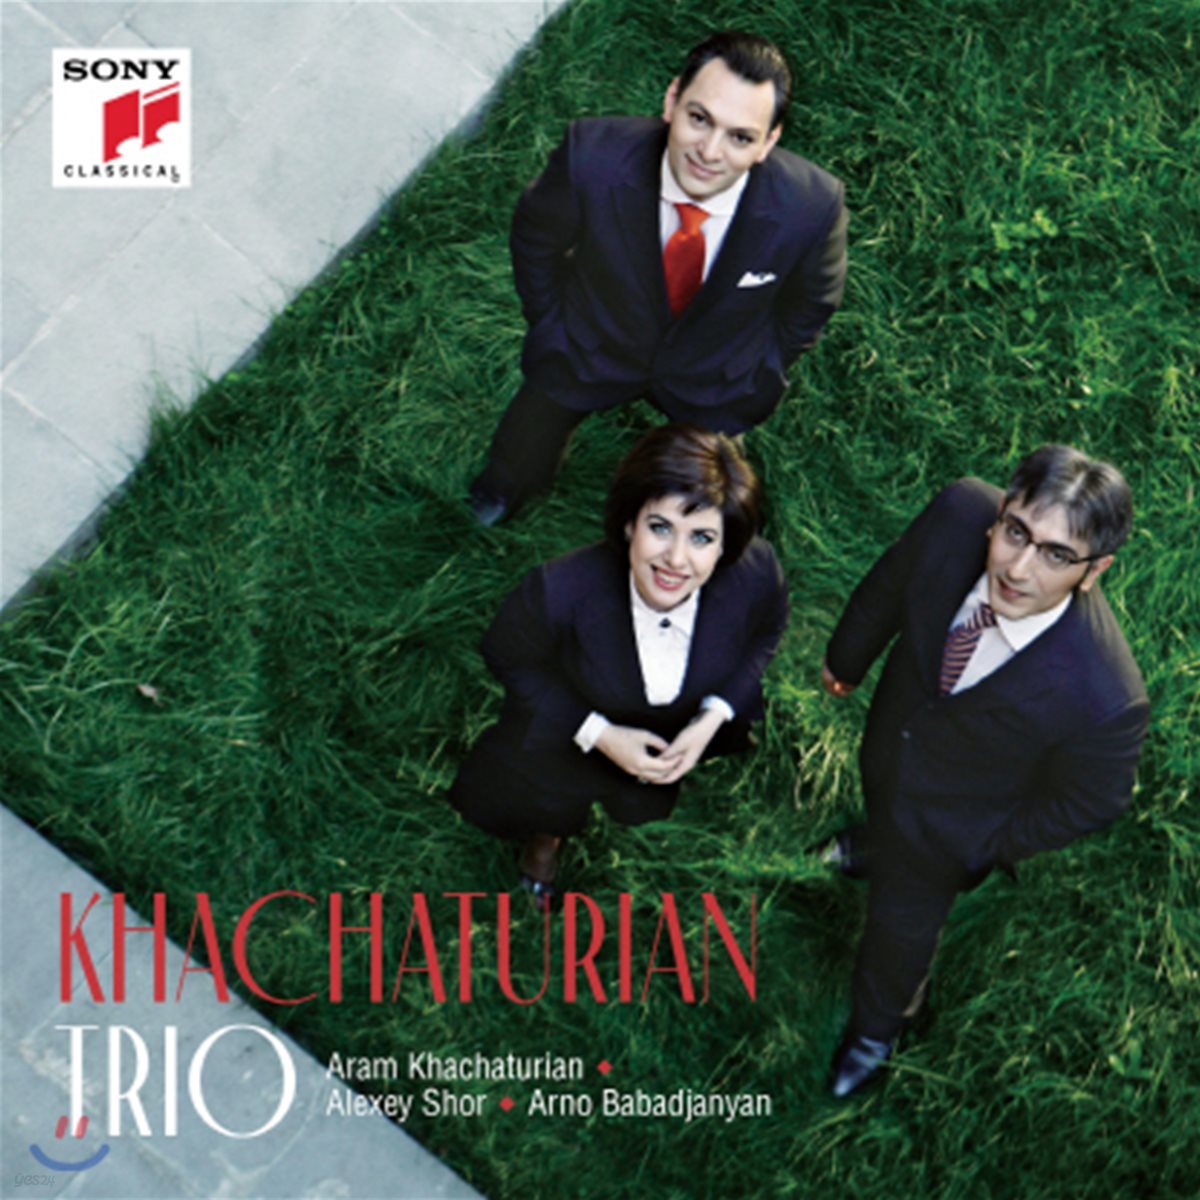 Khachaturian Trio 하차투리안 / 알렉시 쇼어 / 바바자니안: 피아노 삼중주 (Khachaturian / Shor / Babadjanyan)